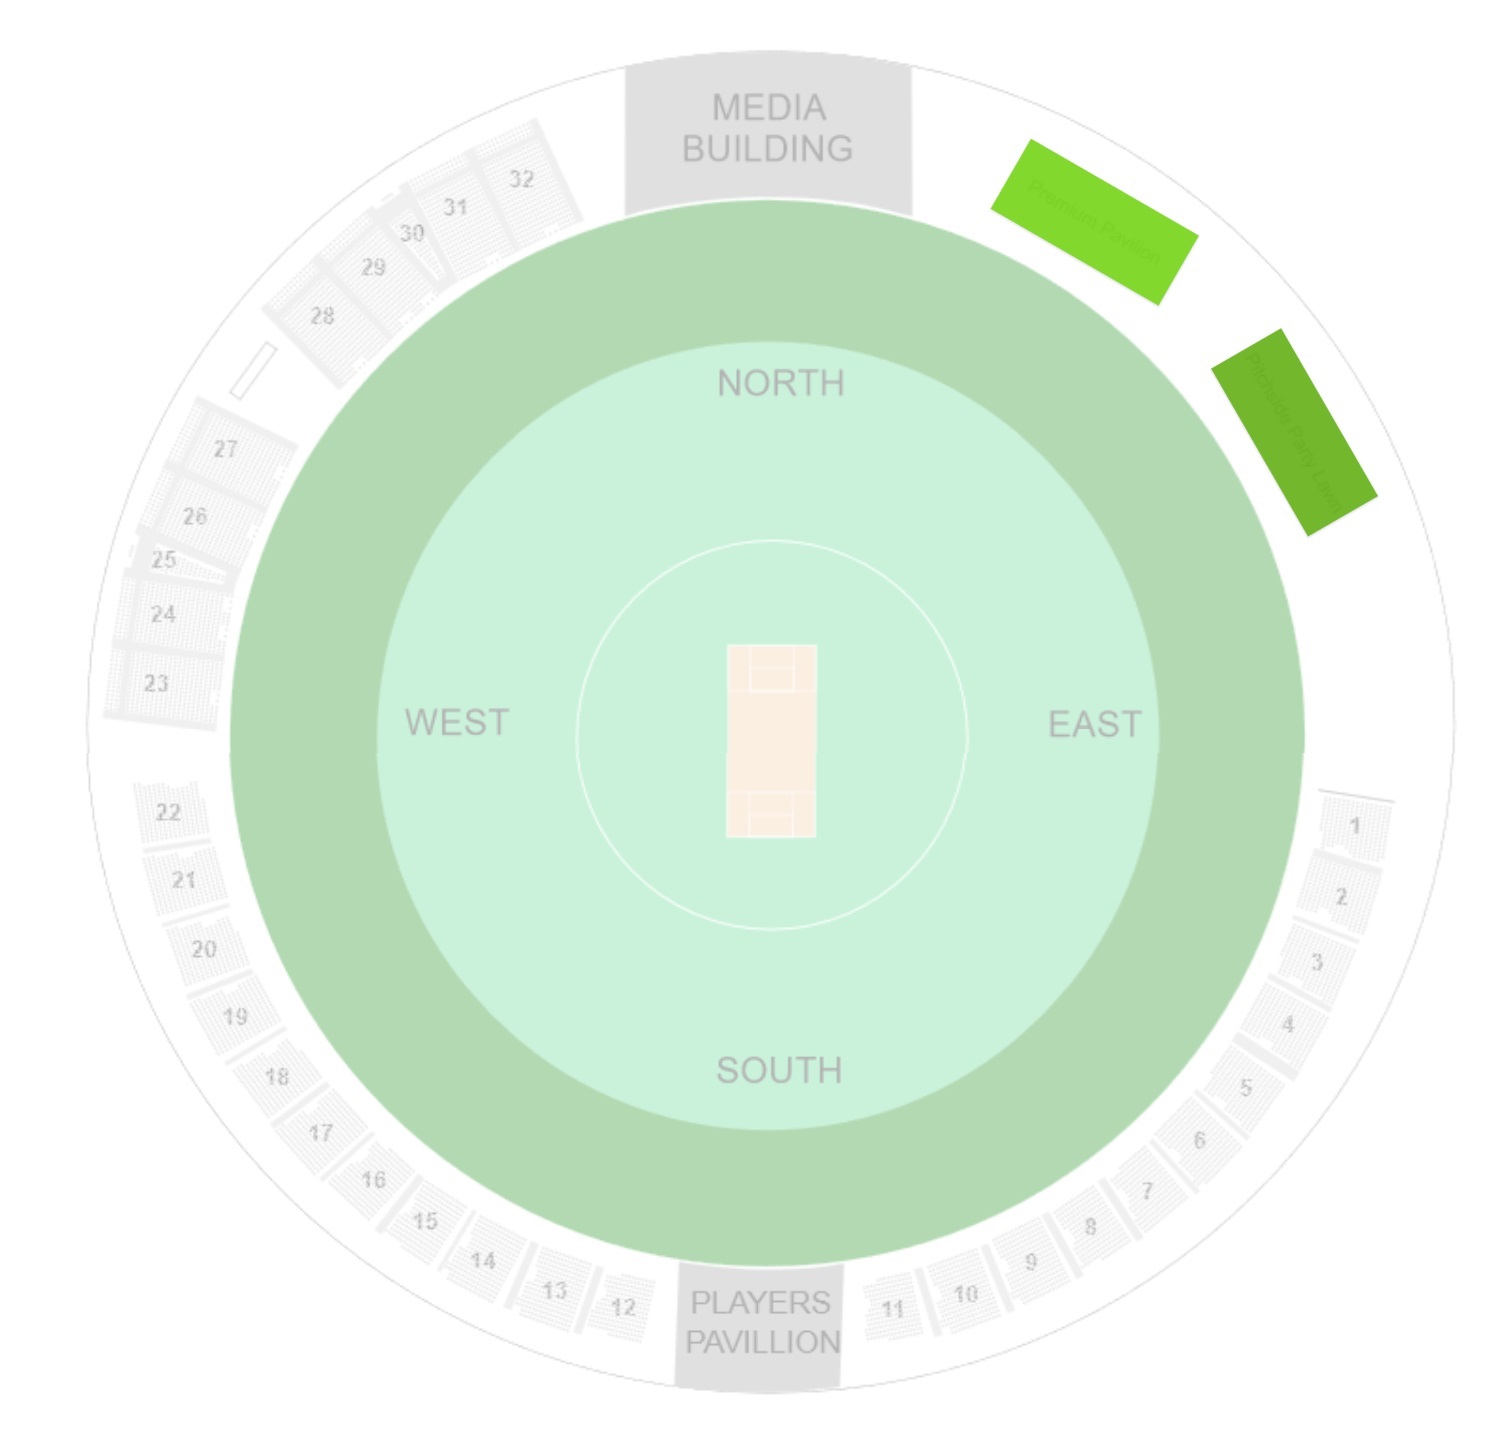 Central Broward Regional Park & Stadium India vs Canada Venue Seating Plan